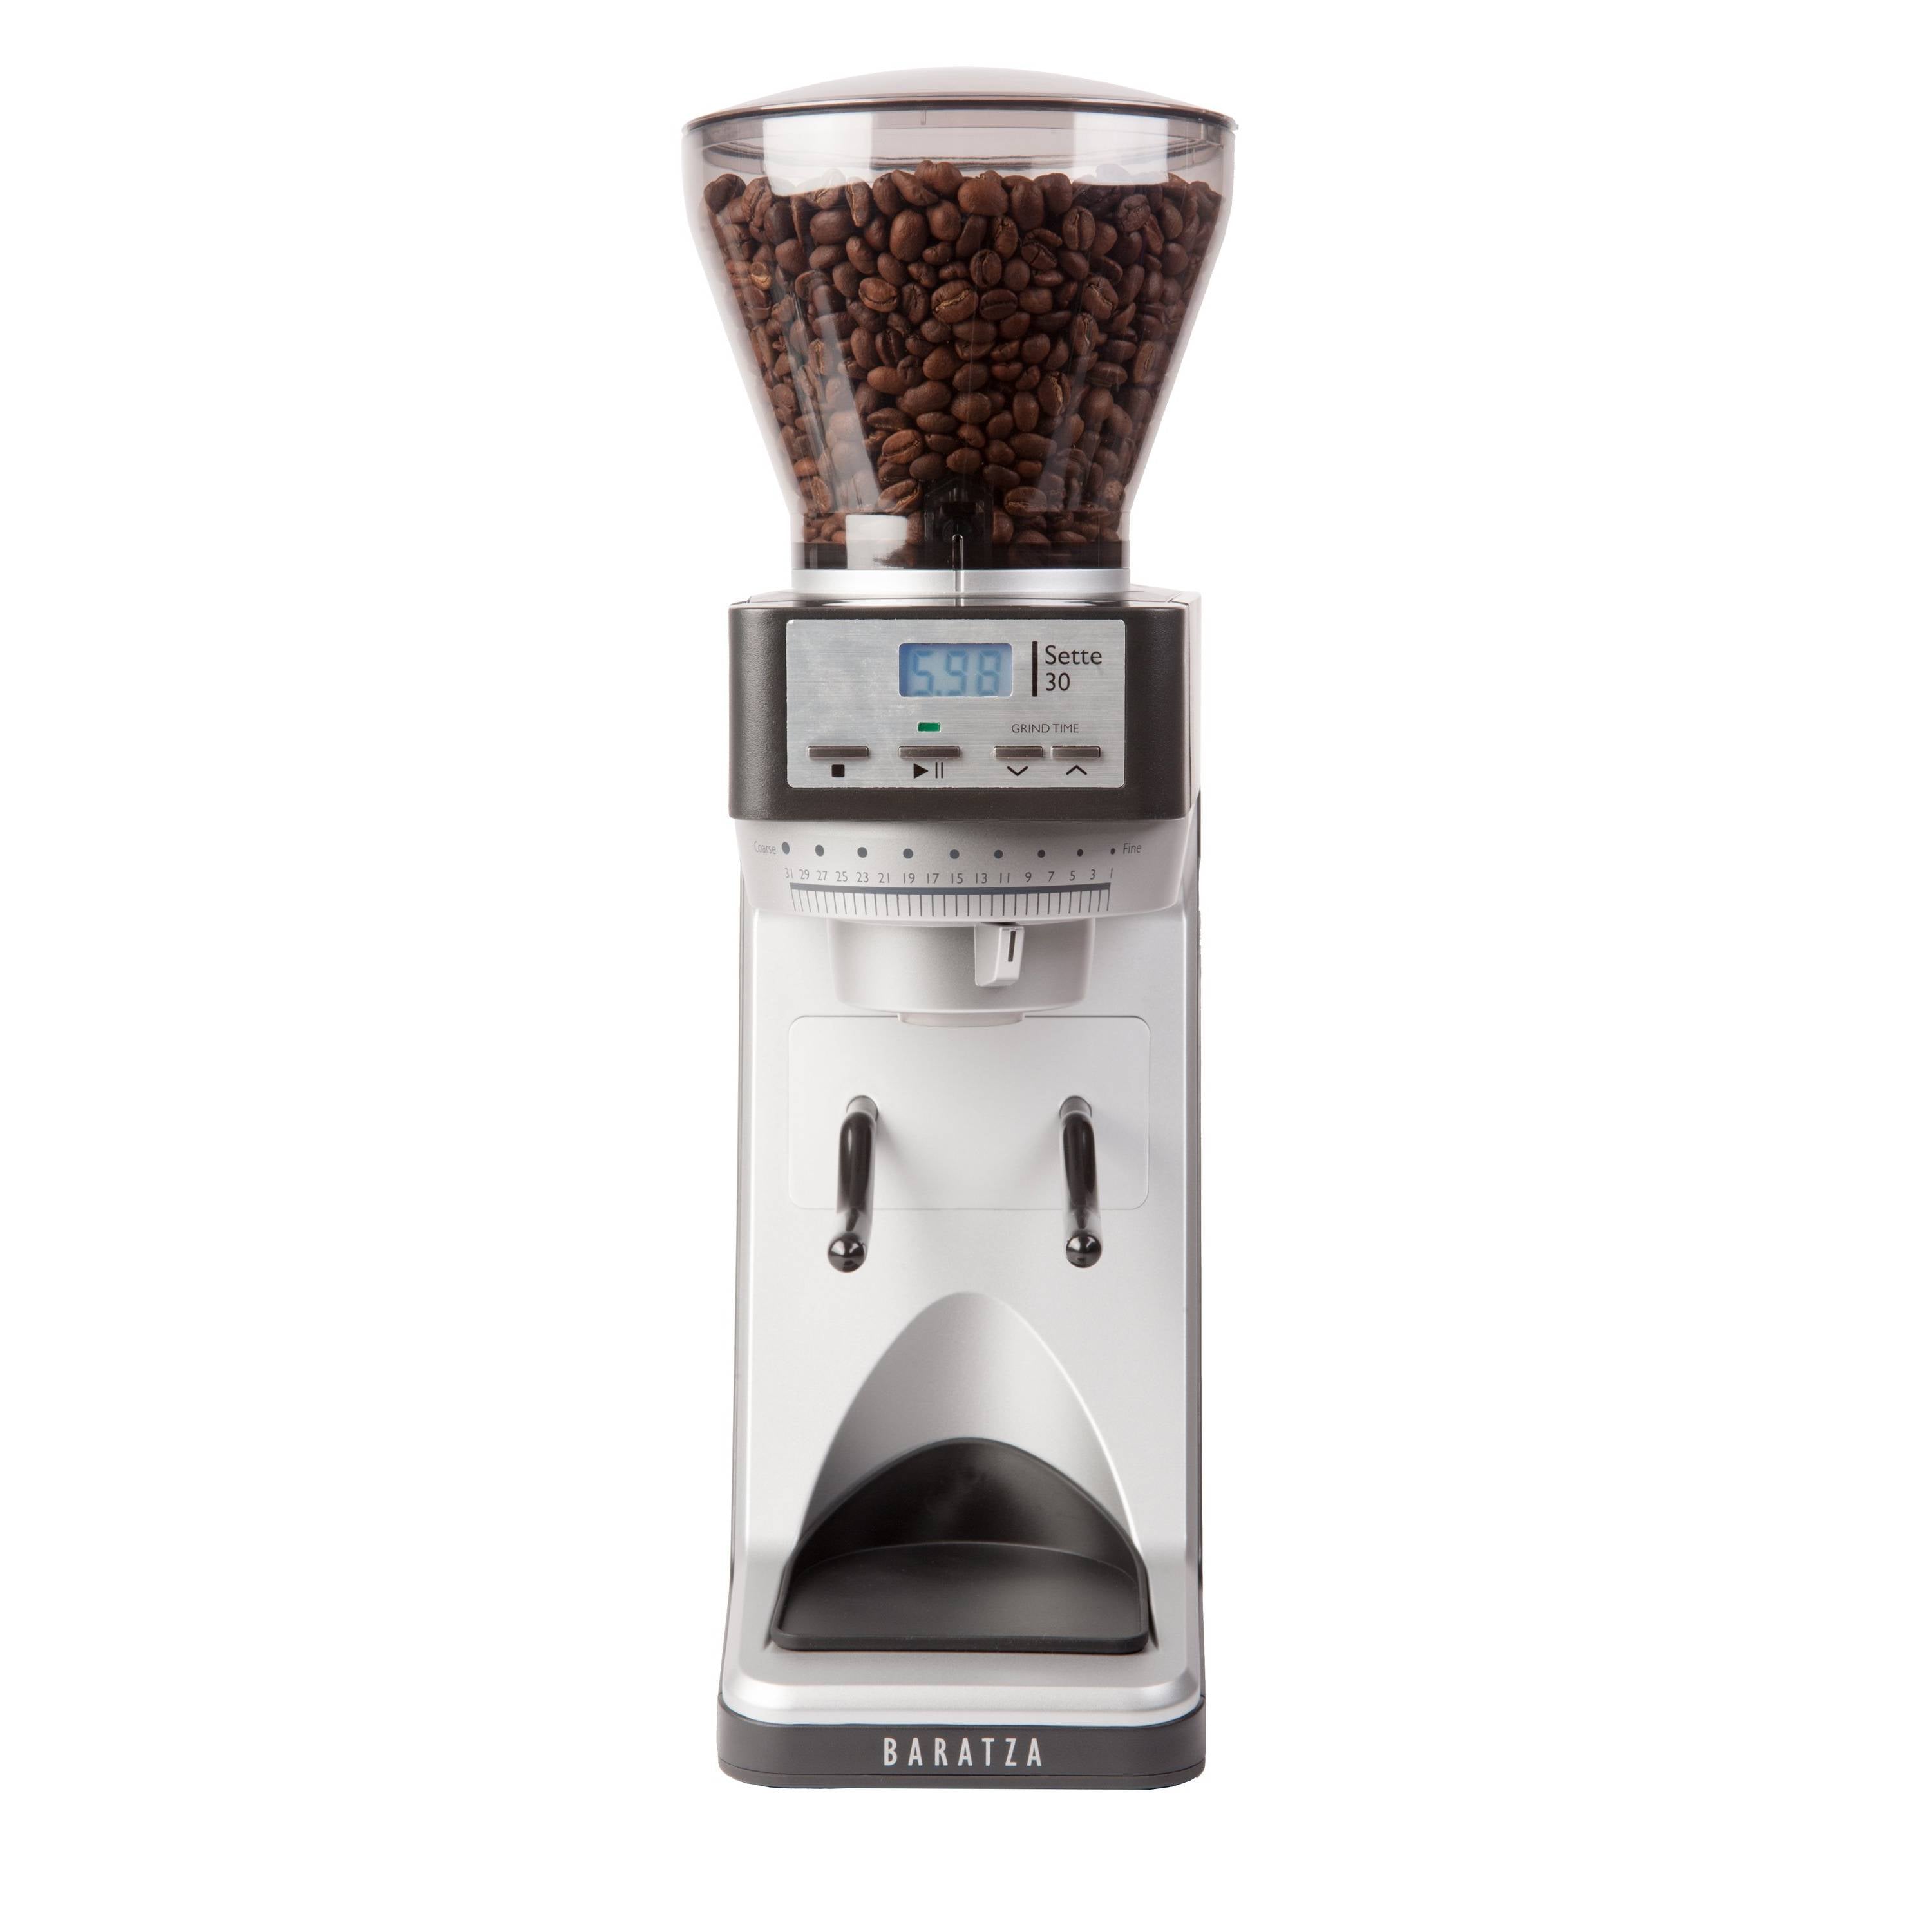 Baratza Sette 30 coffee grinder